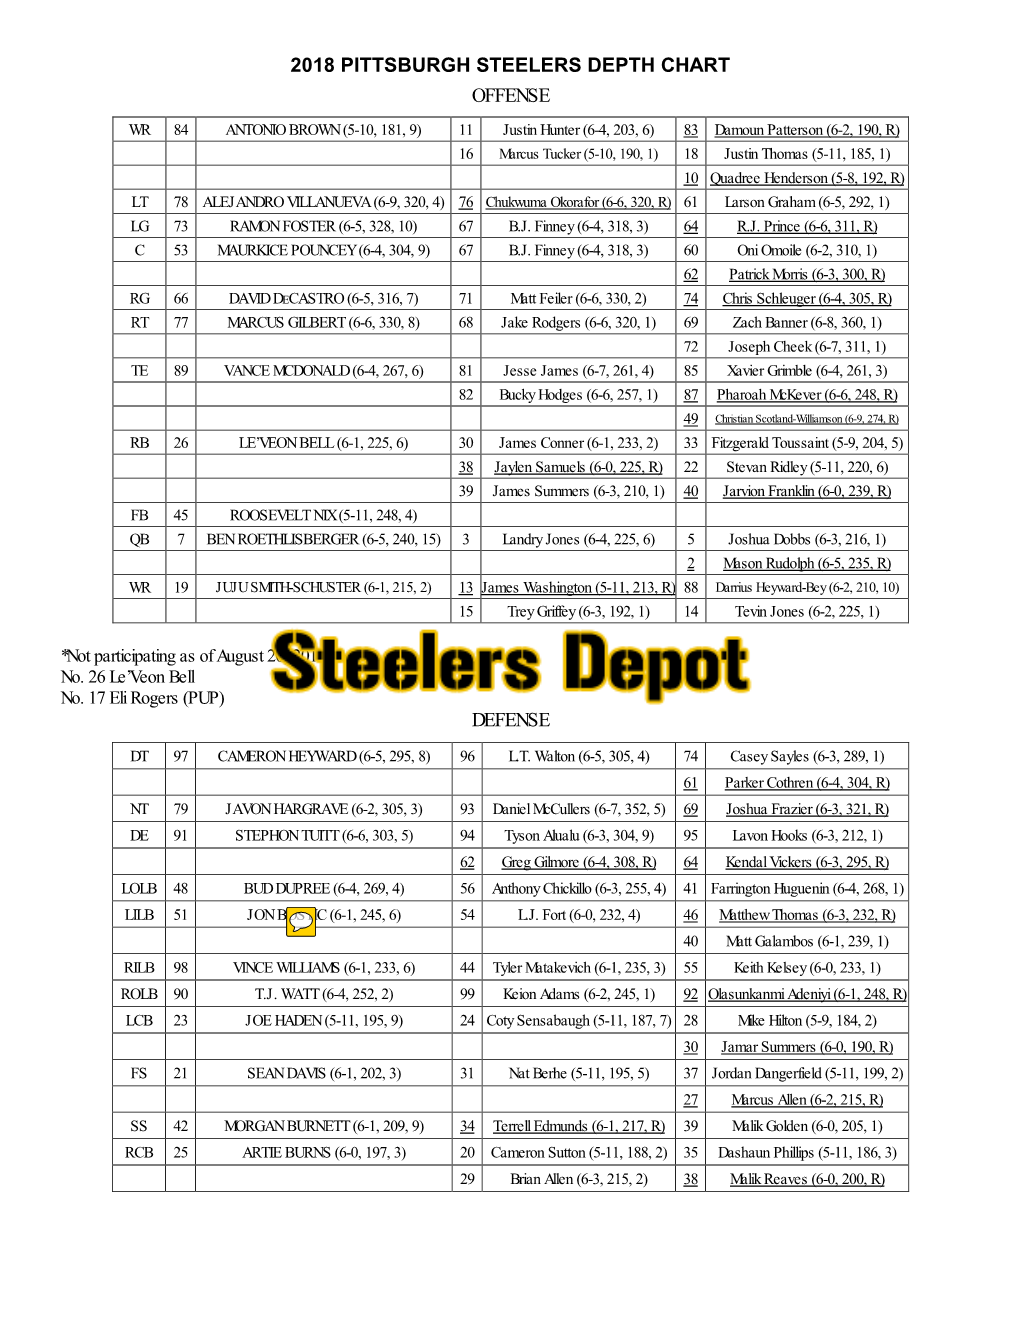 2018 Pittsburgh Steelers Depth Chart Offense Defense